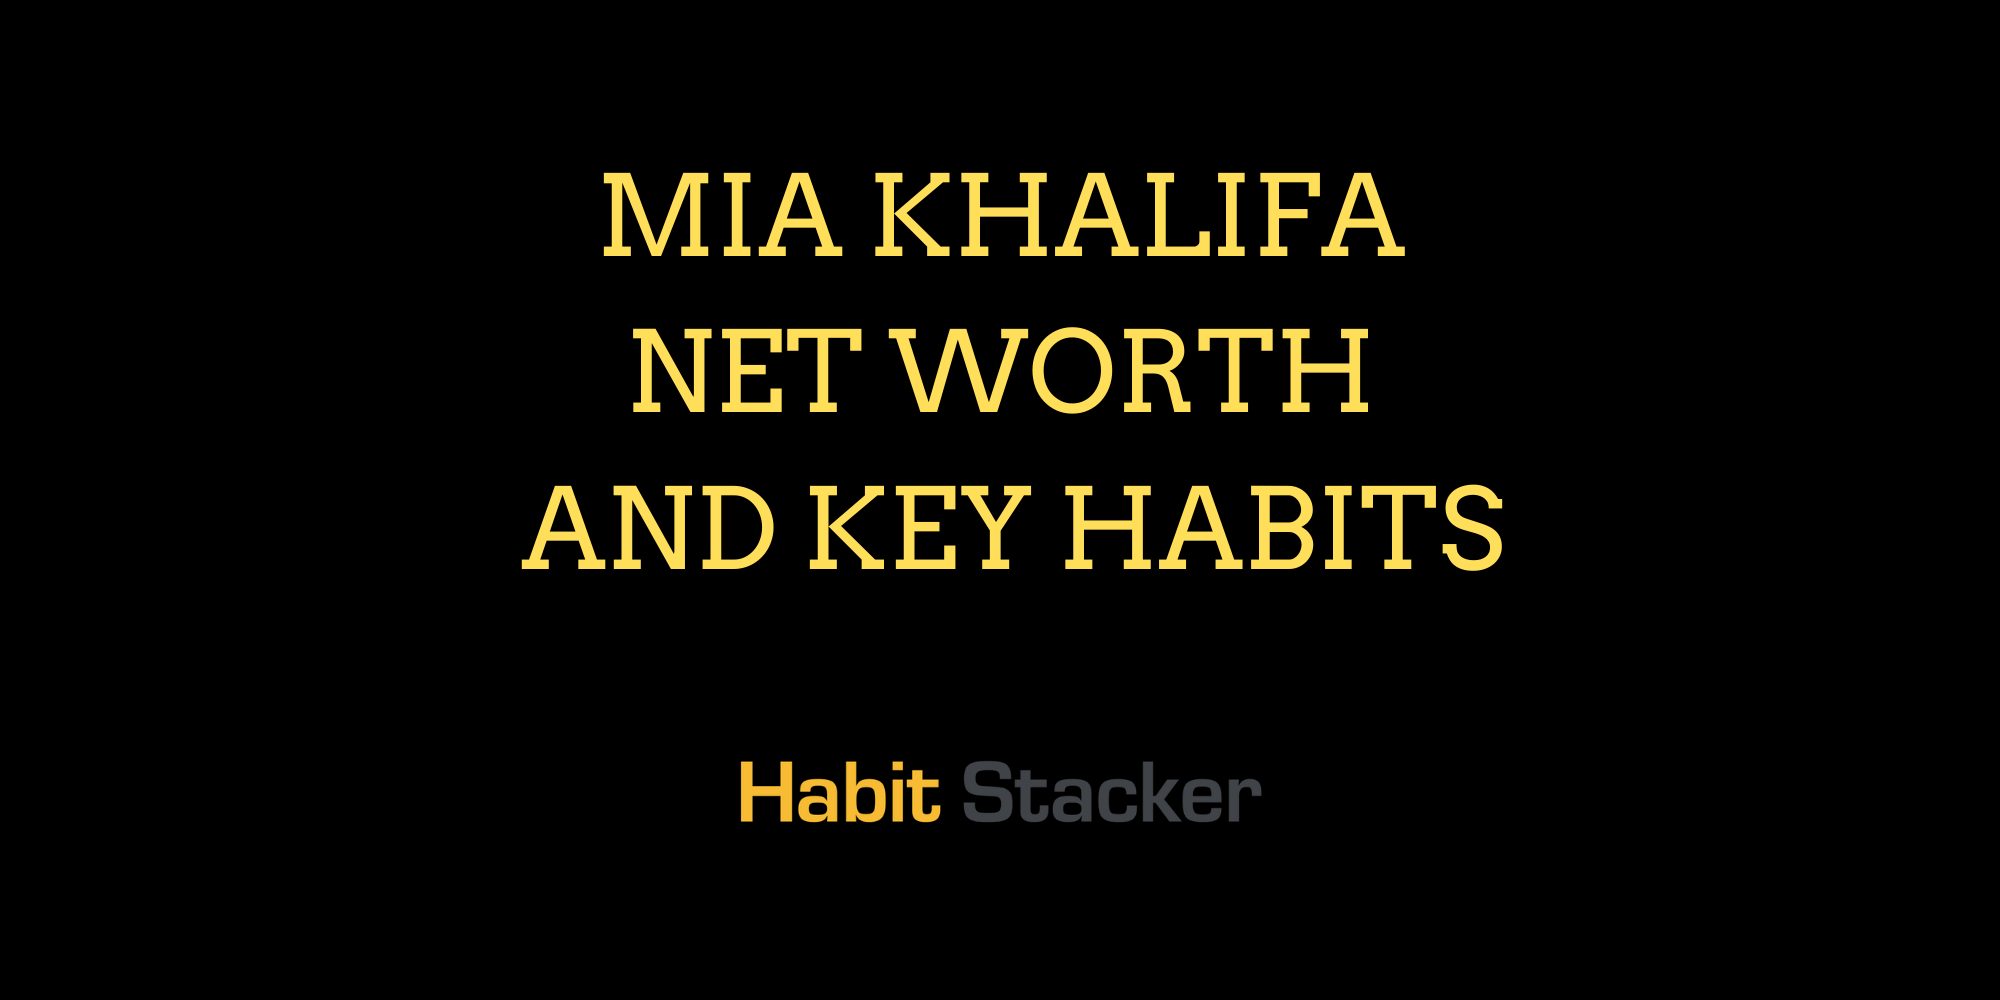 Mia Khalifa Net Worth and Key Habits